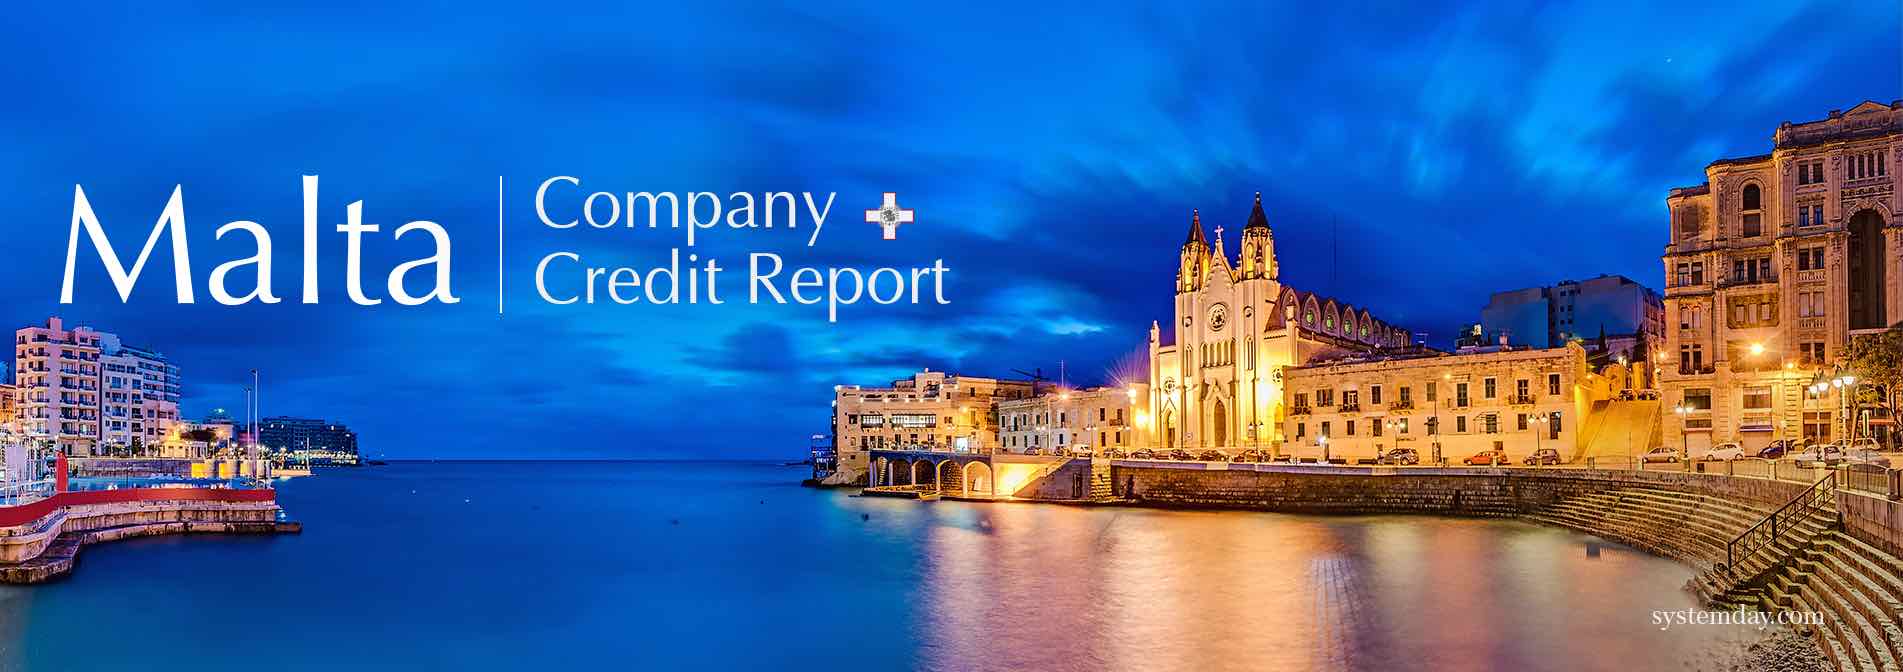 Malta Company Credit Report